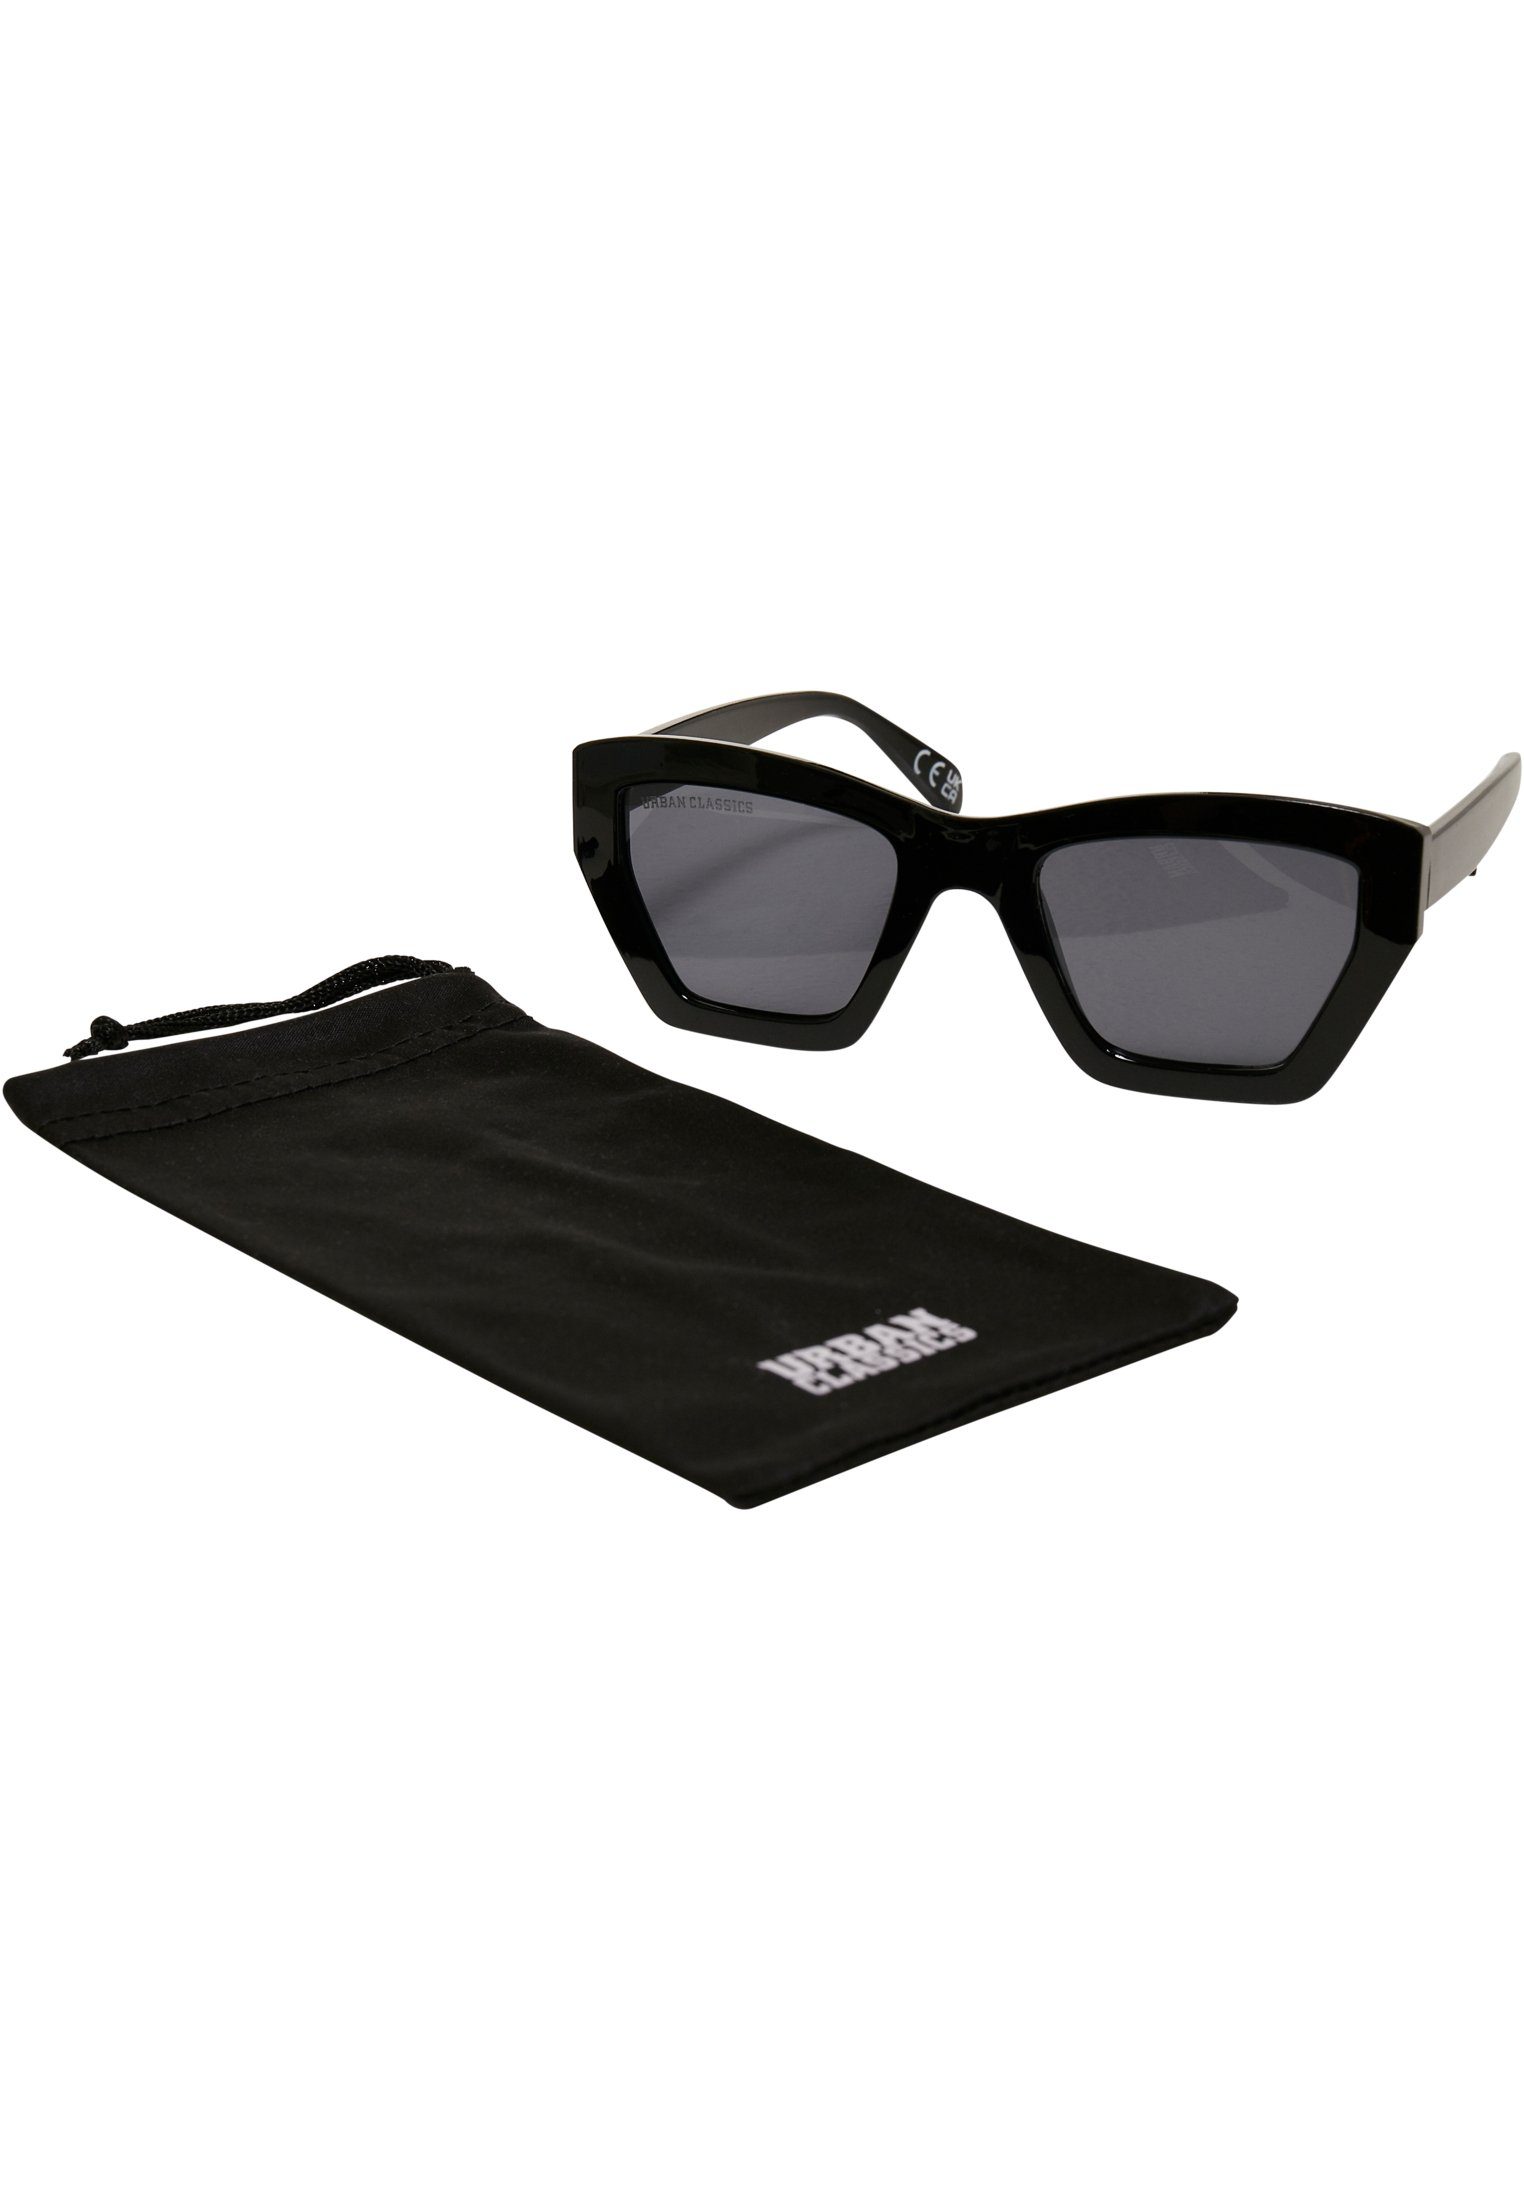 Unisex URBAN black Sonnenbrille Grande CLASSICS Sunglasses Rio